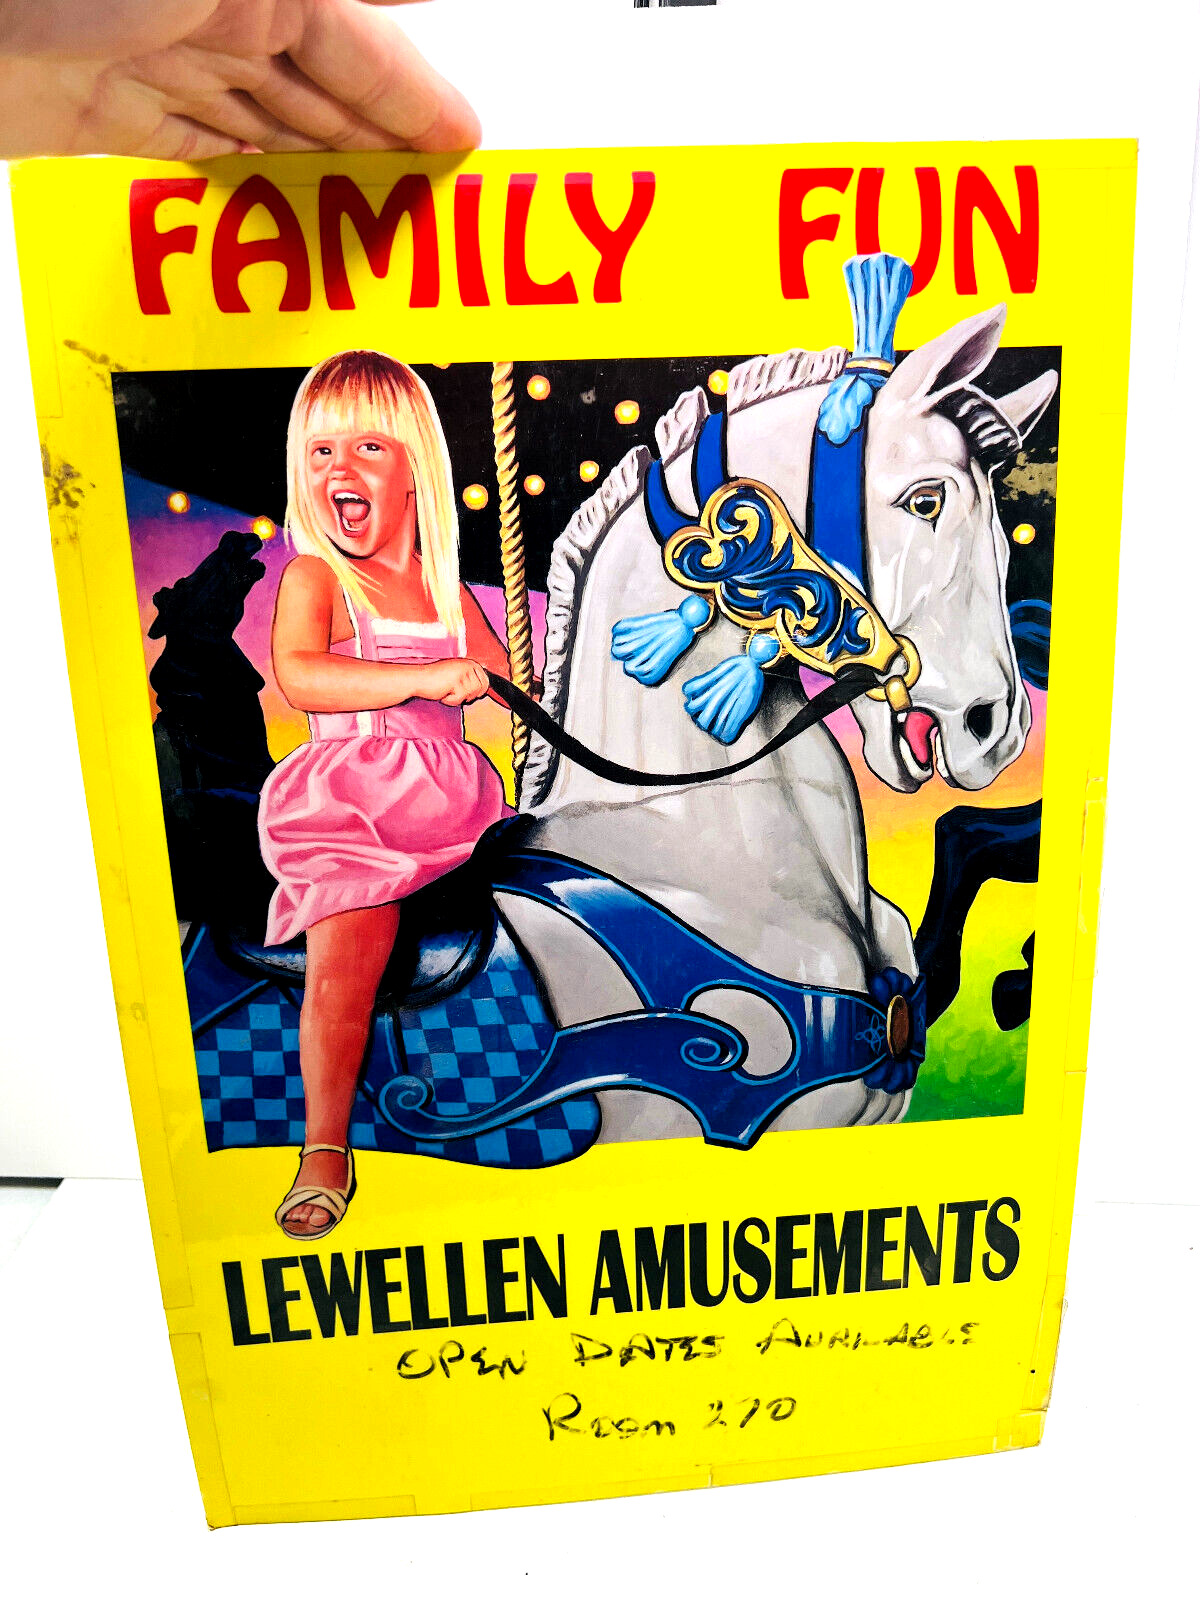 vtg 1980s 90s Lewellen Amusements Circus Carnival POster family fun carousel